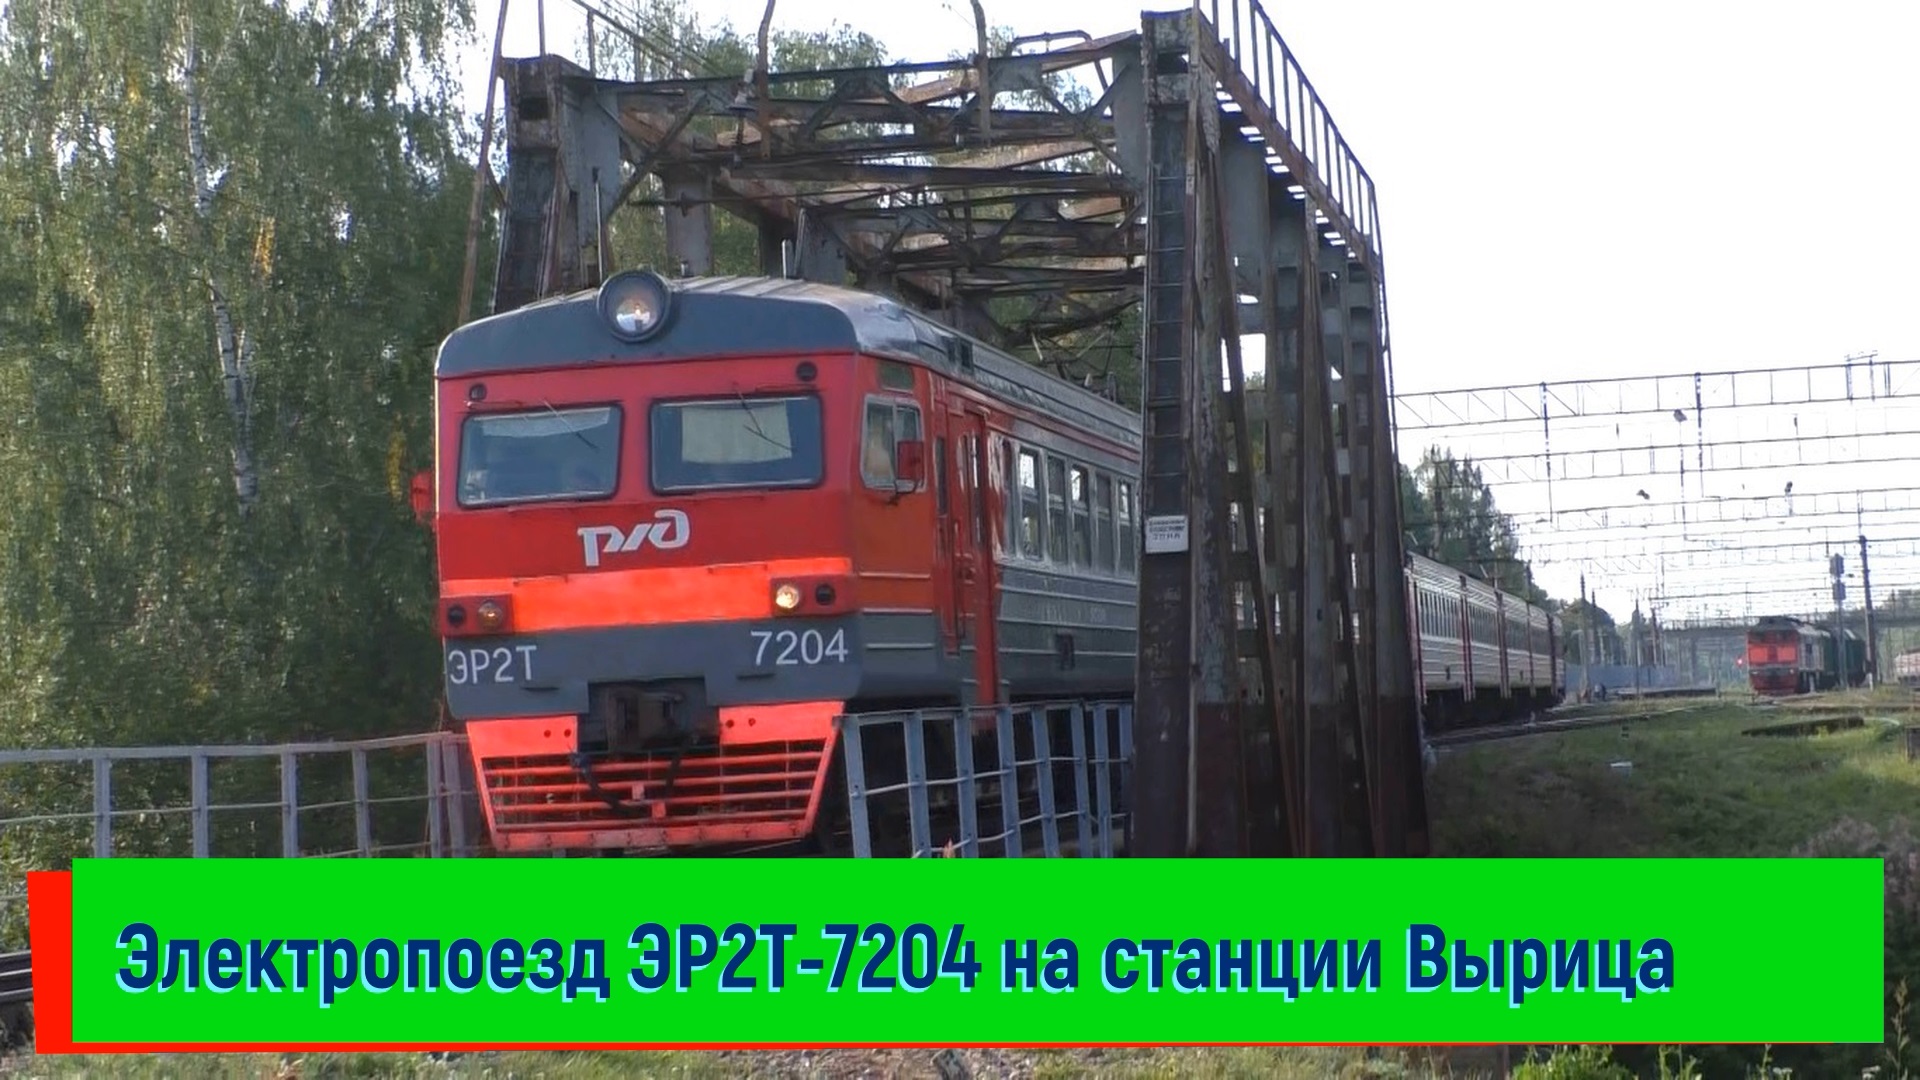 Электропоезд ЭР2Т-7204 на станции Вырица | ER2T-7204, Vyritsa station